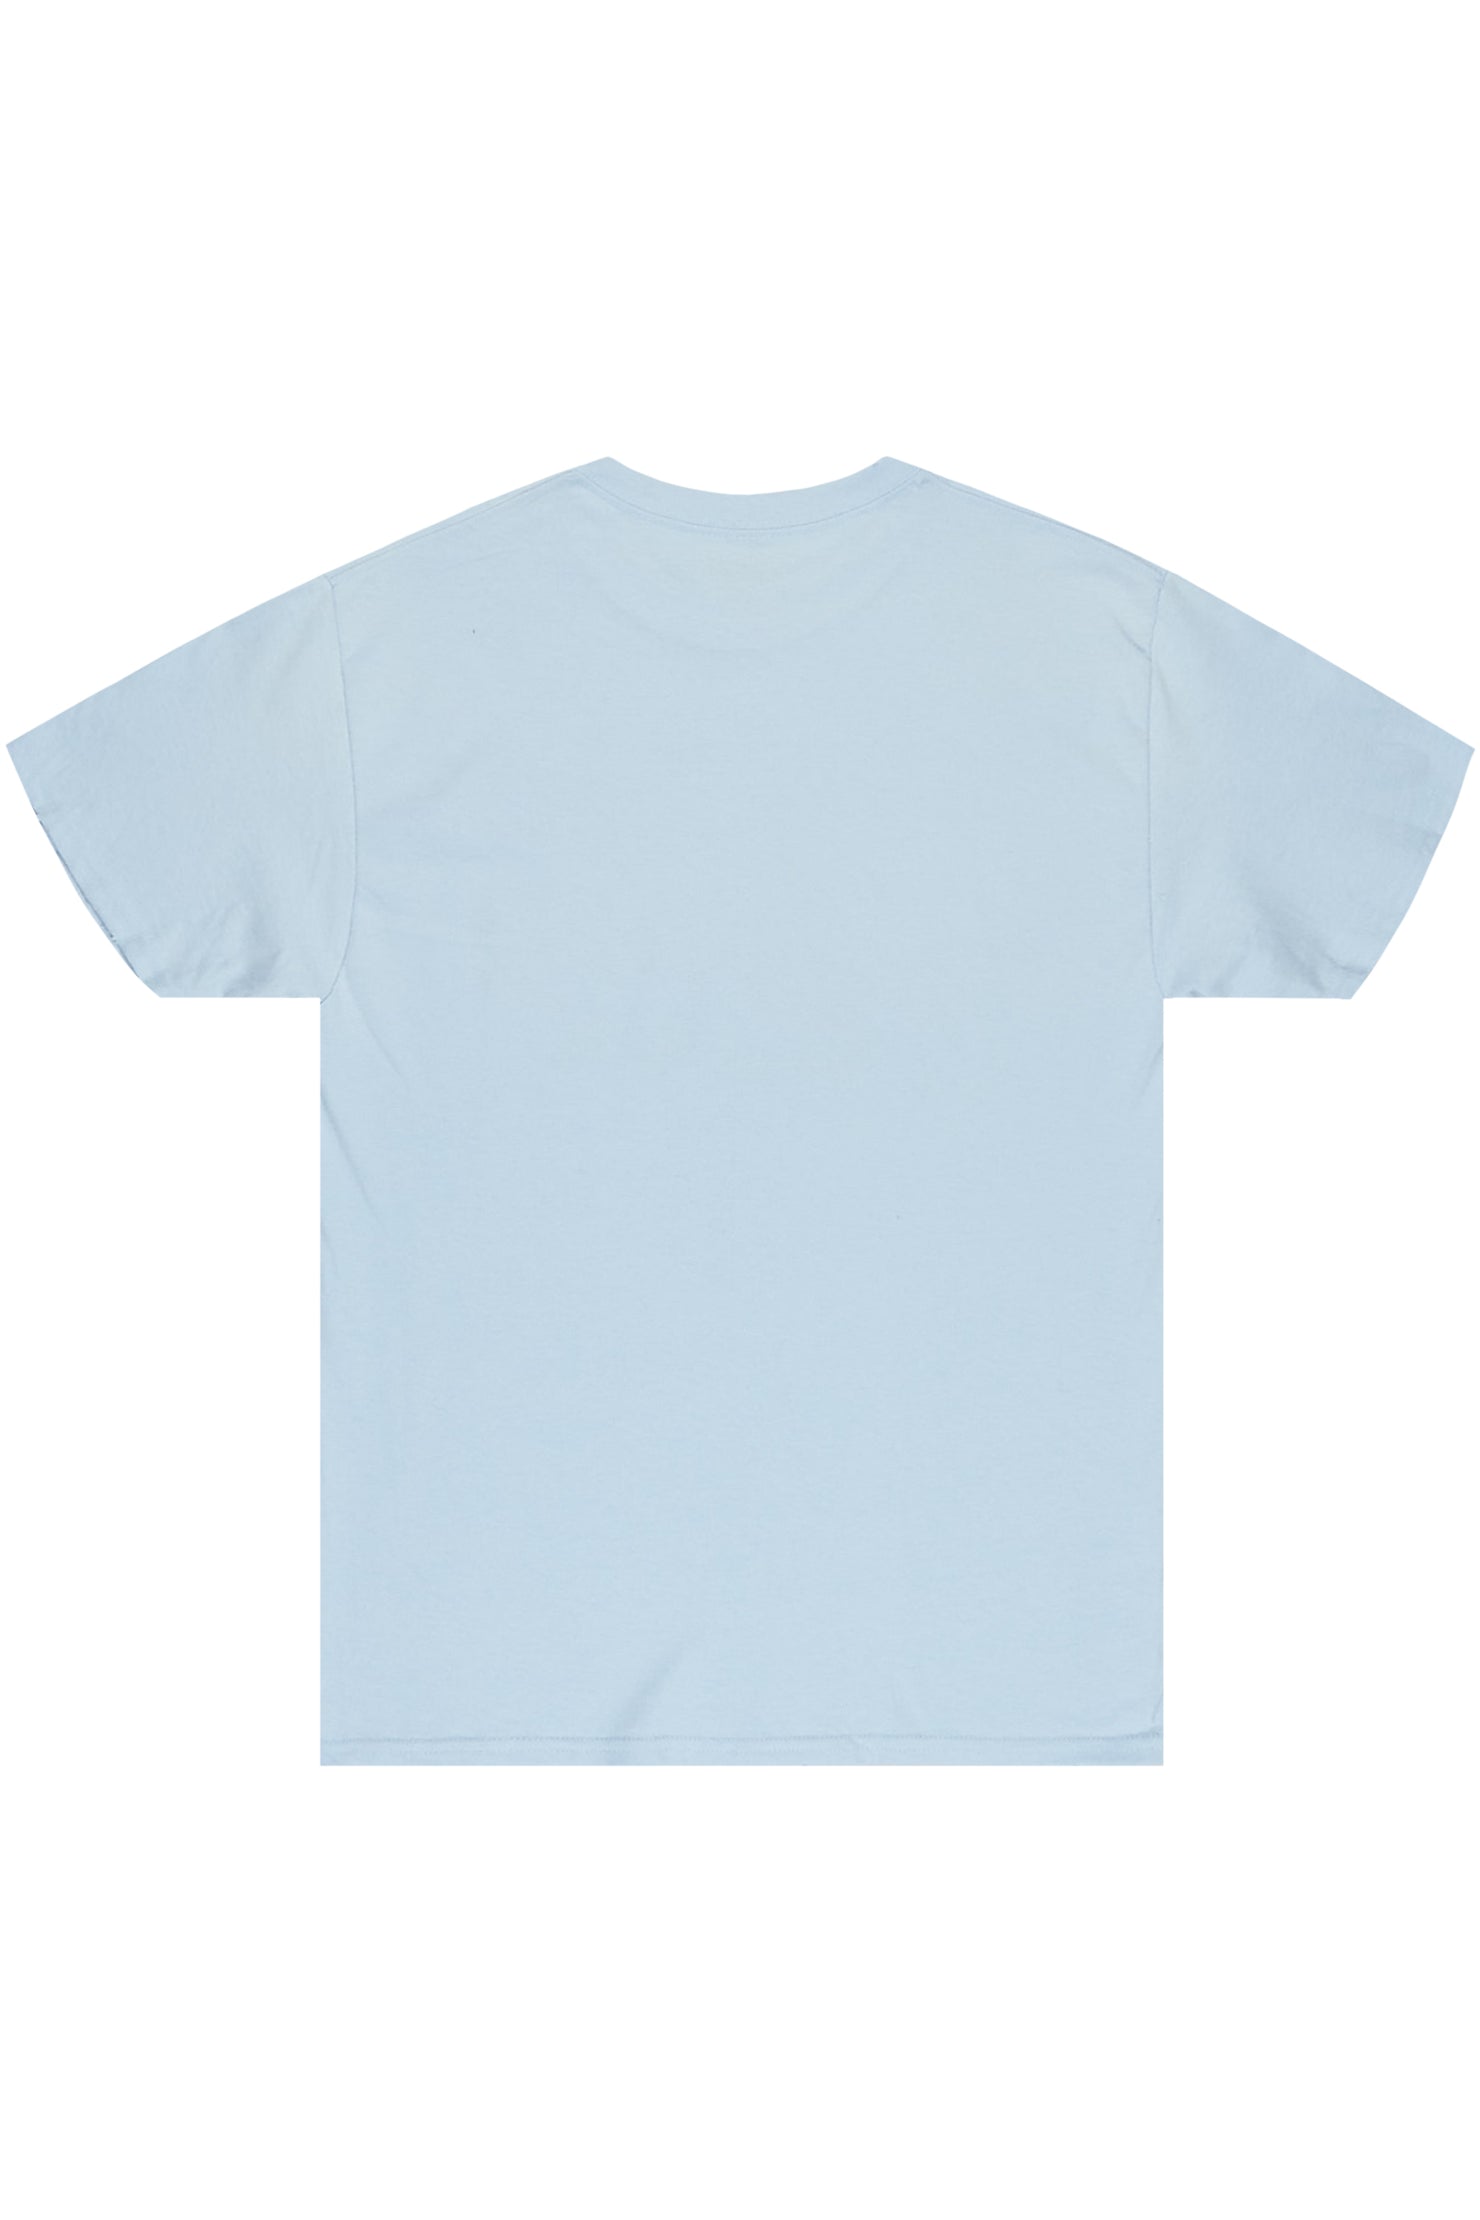 Zustrand Light Blue Graphic Rockstar T-Shirt– Original